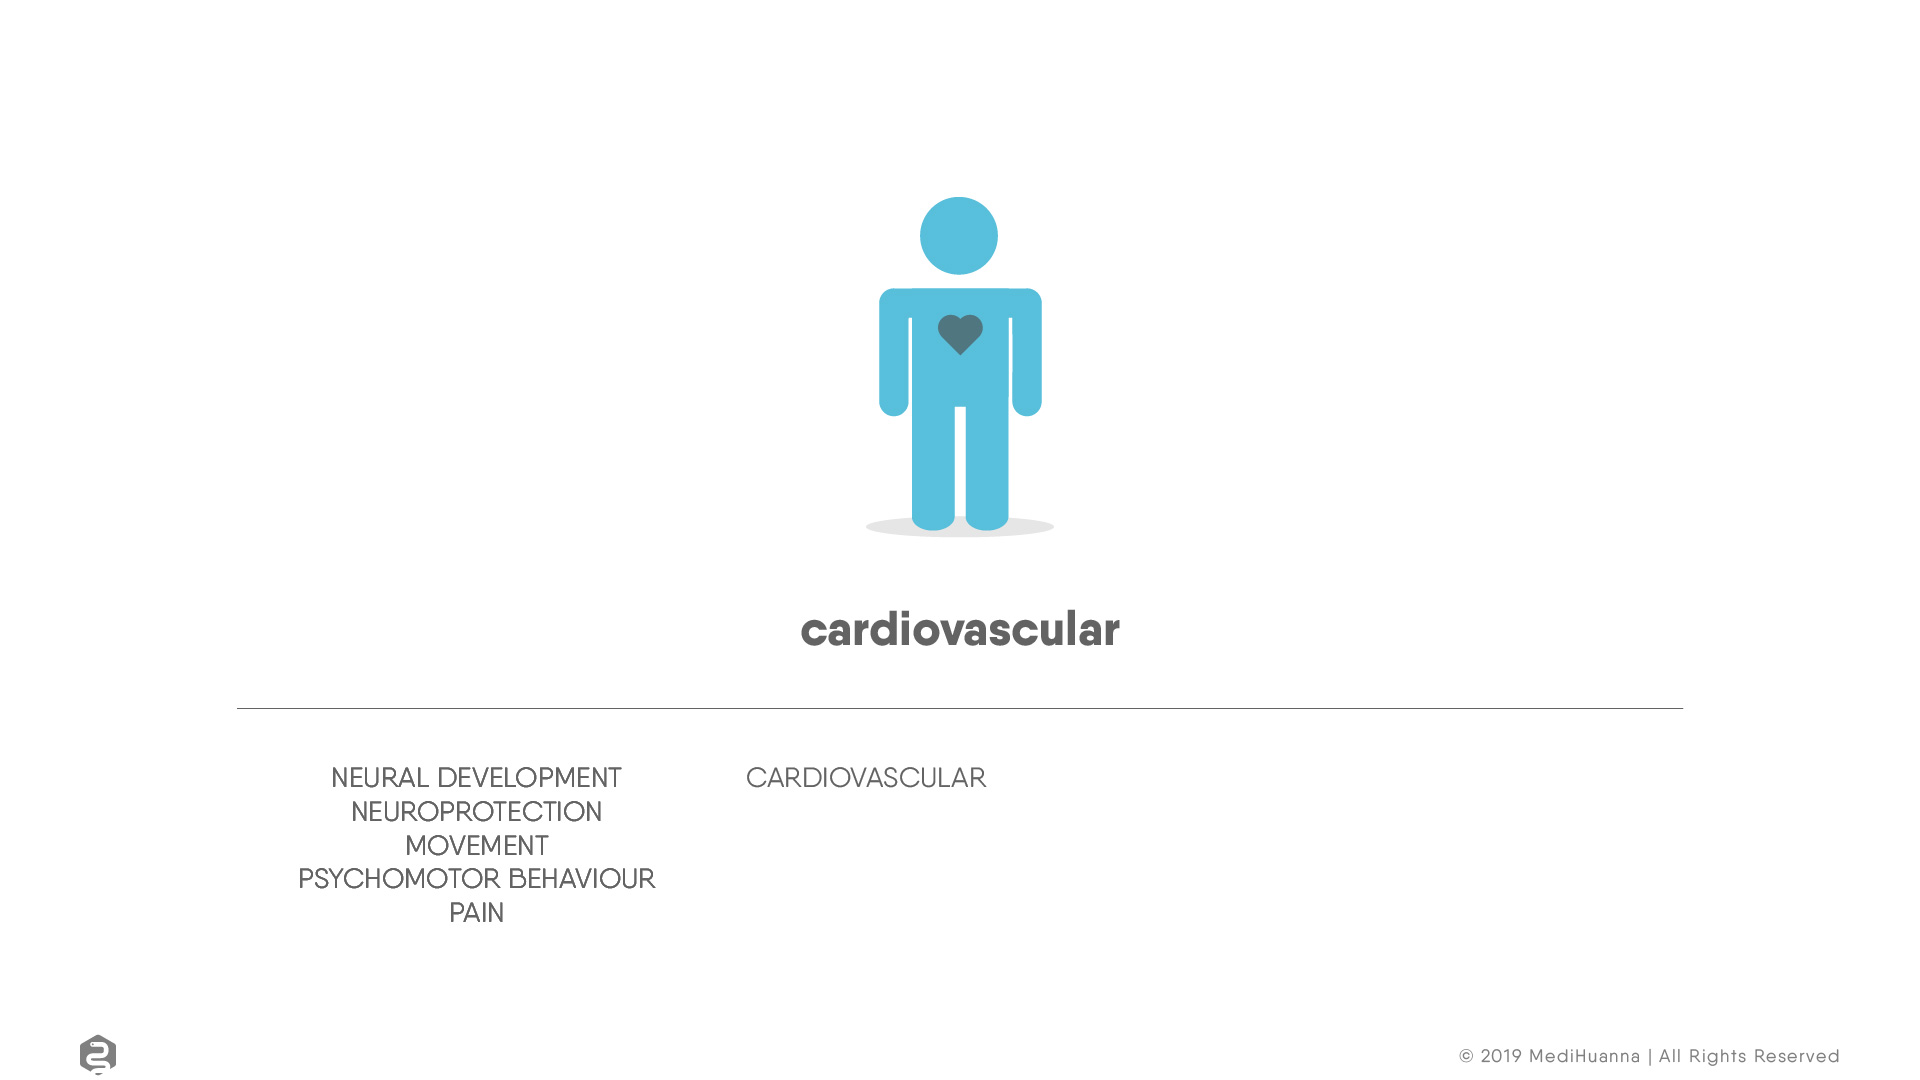 Neural development, cardioviscular